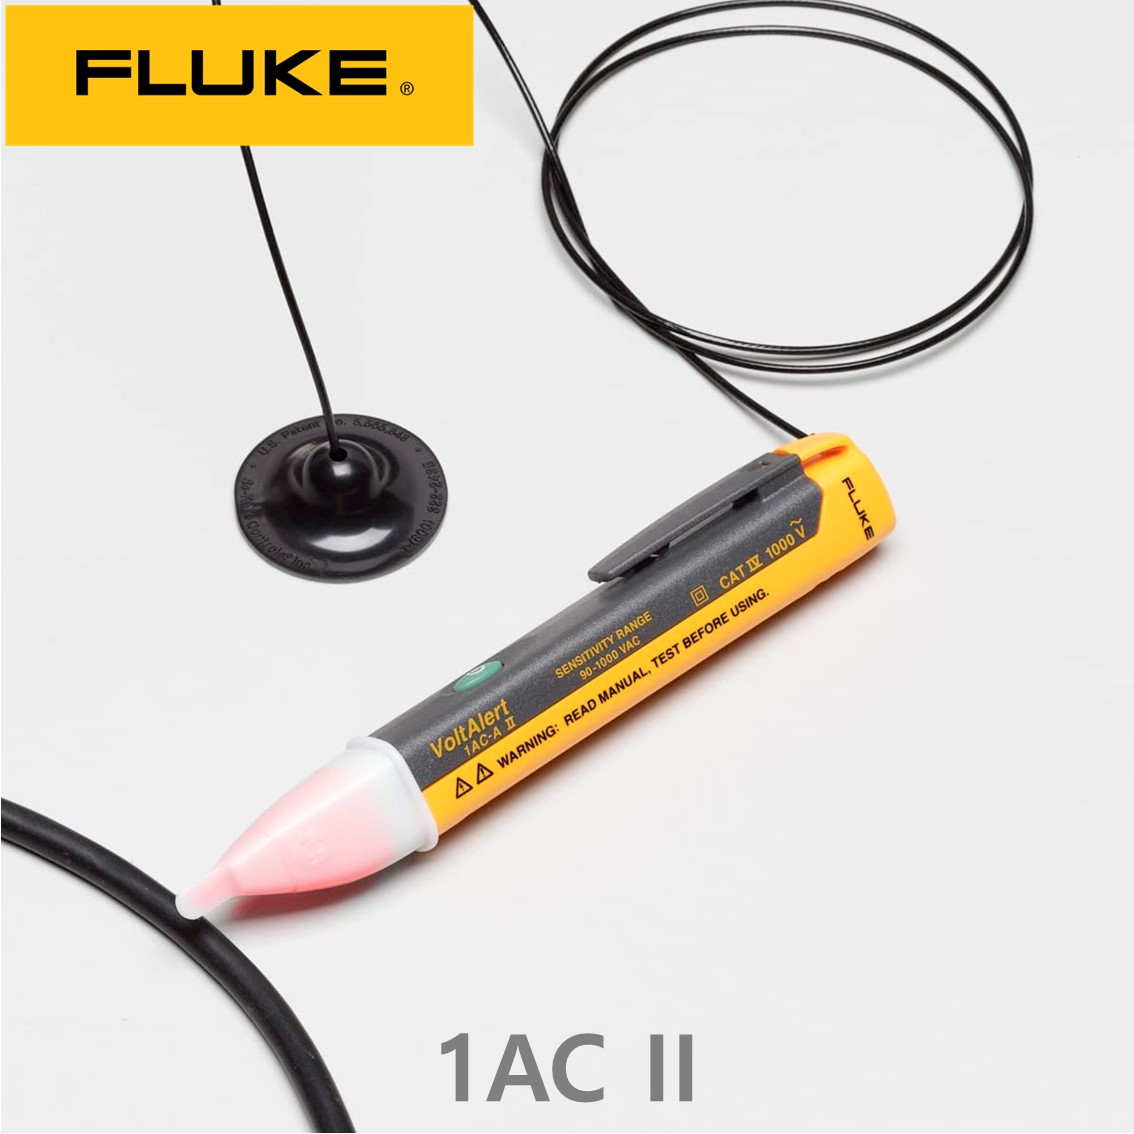 [ FLUKE 1AC II ] 정품 플루크 접촉식 검전기,전압감기, 테스터기 (AC 90-1000V)